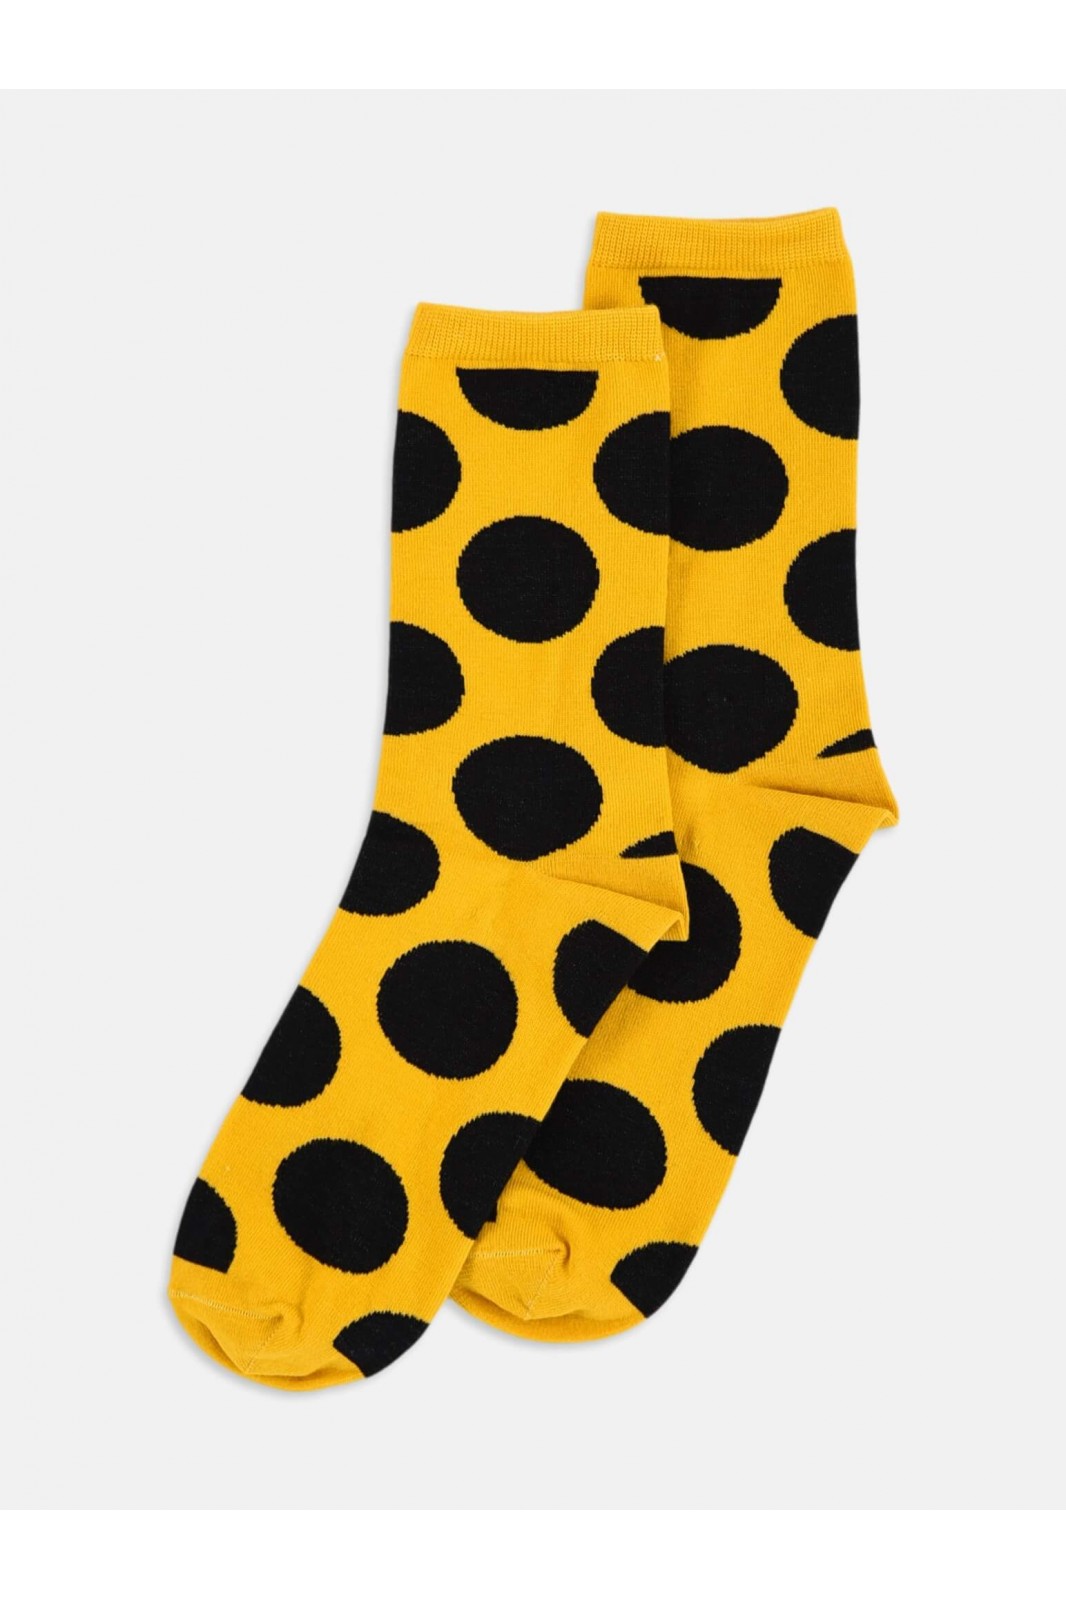 Womens socks LA DIVA Polka dots Fuchsia and Yellow